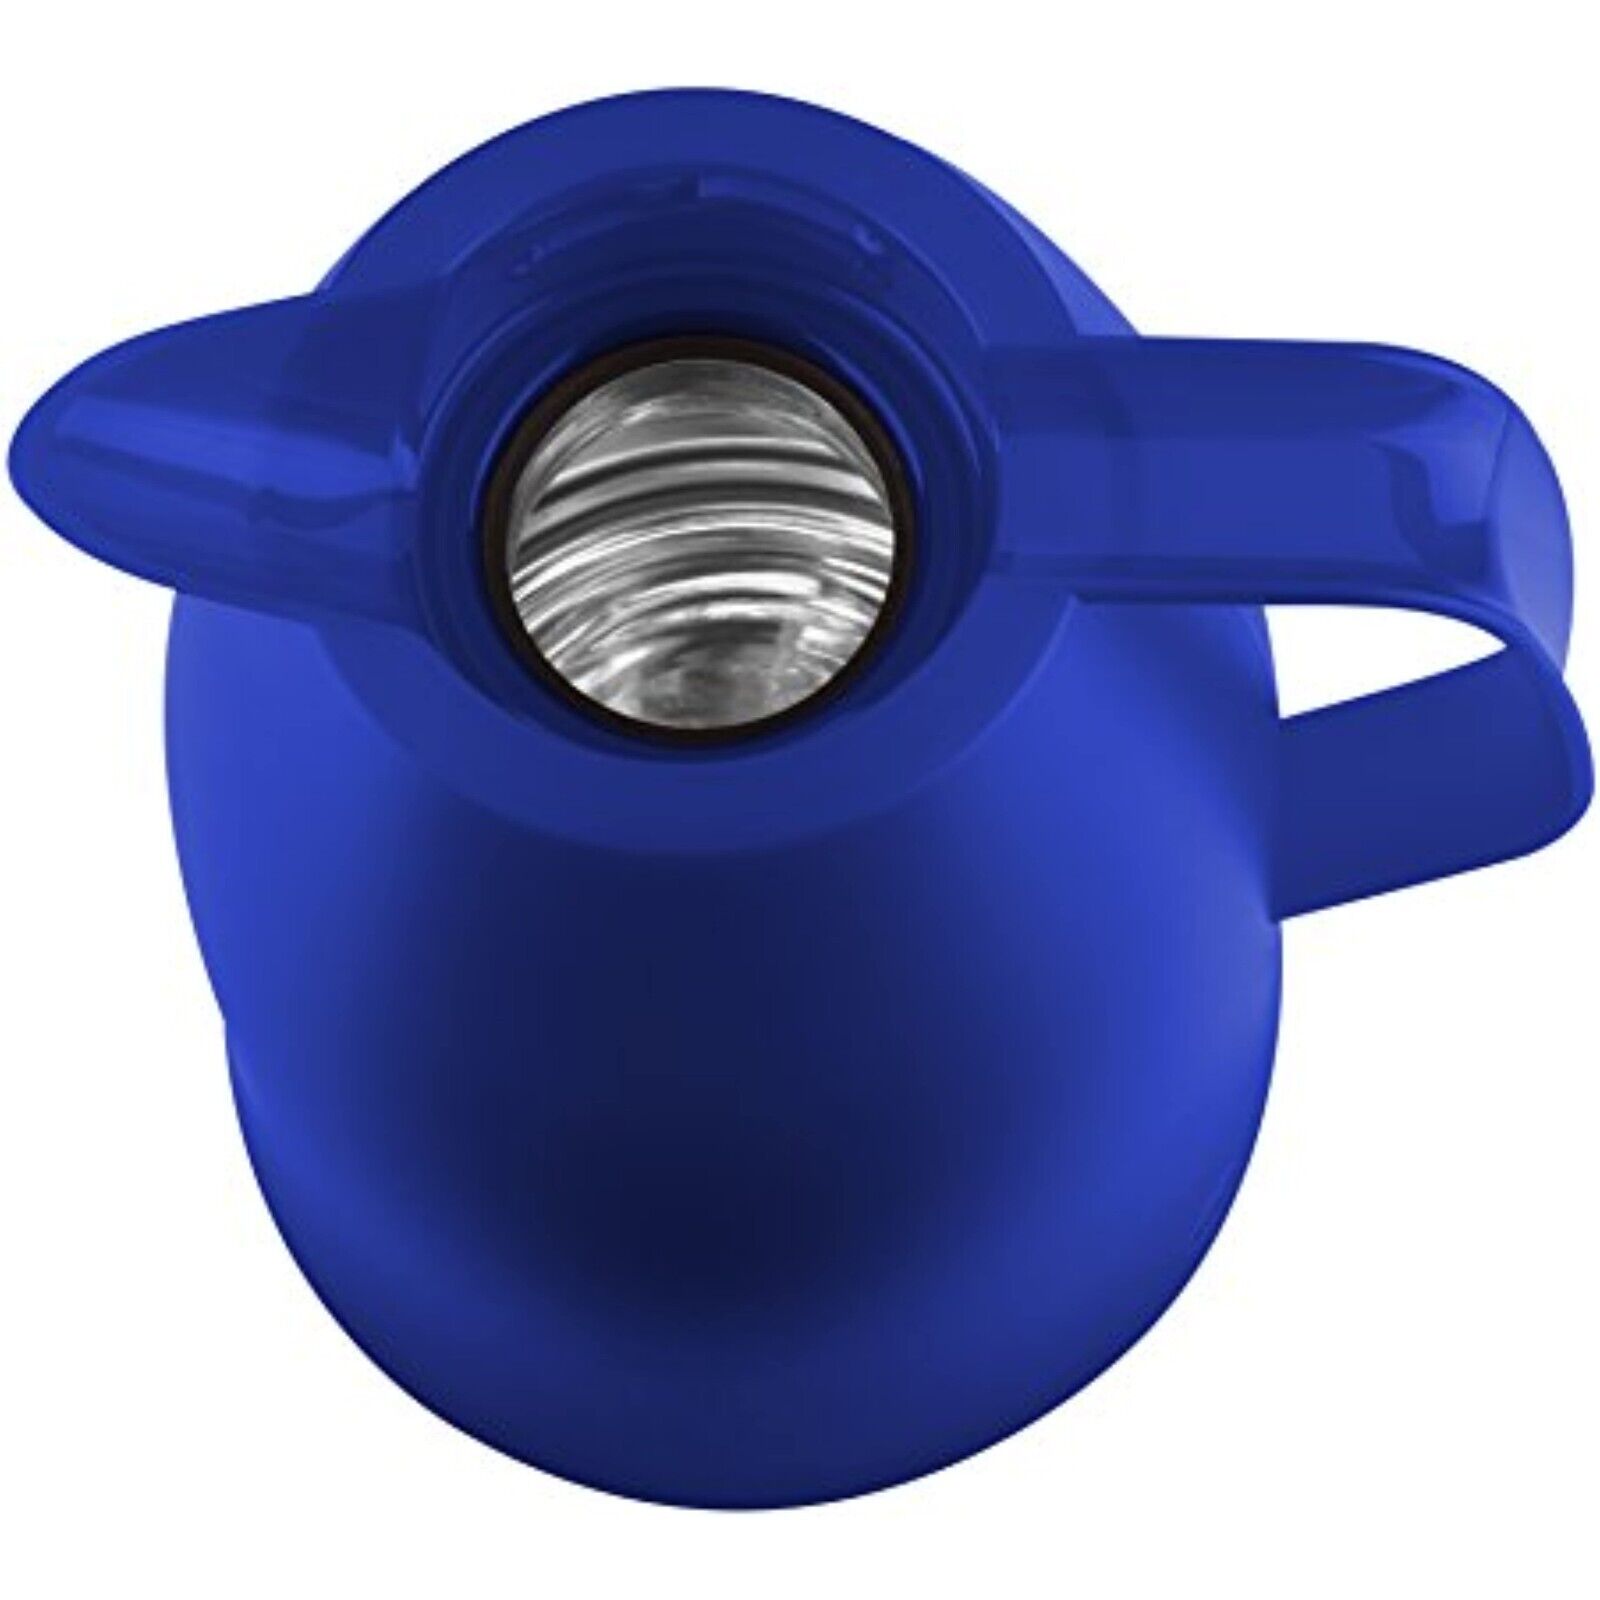 Emsa Mambo QT Isokanne Kanne Kaffeekanne Thermokanne Kunststoff Blau 1L